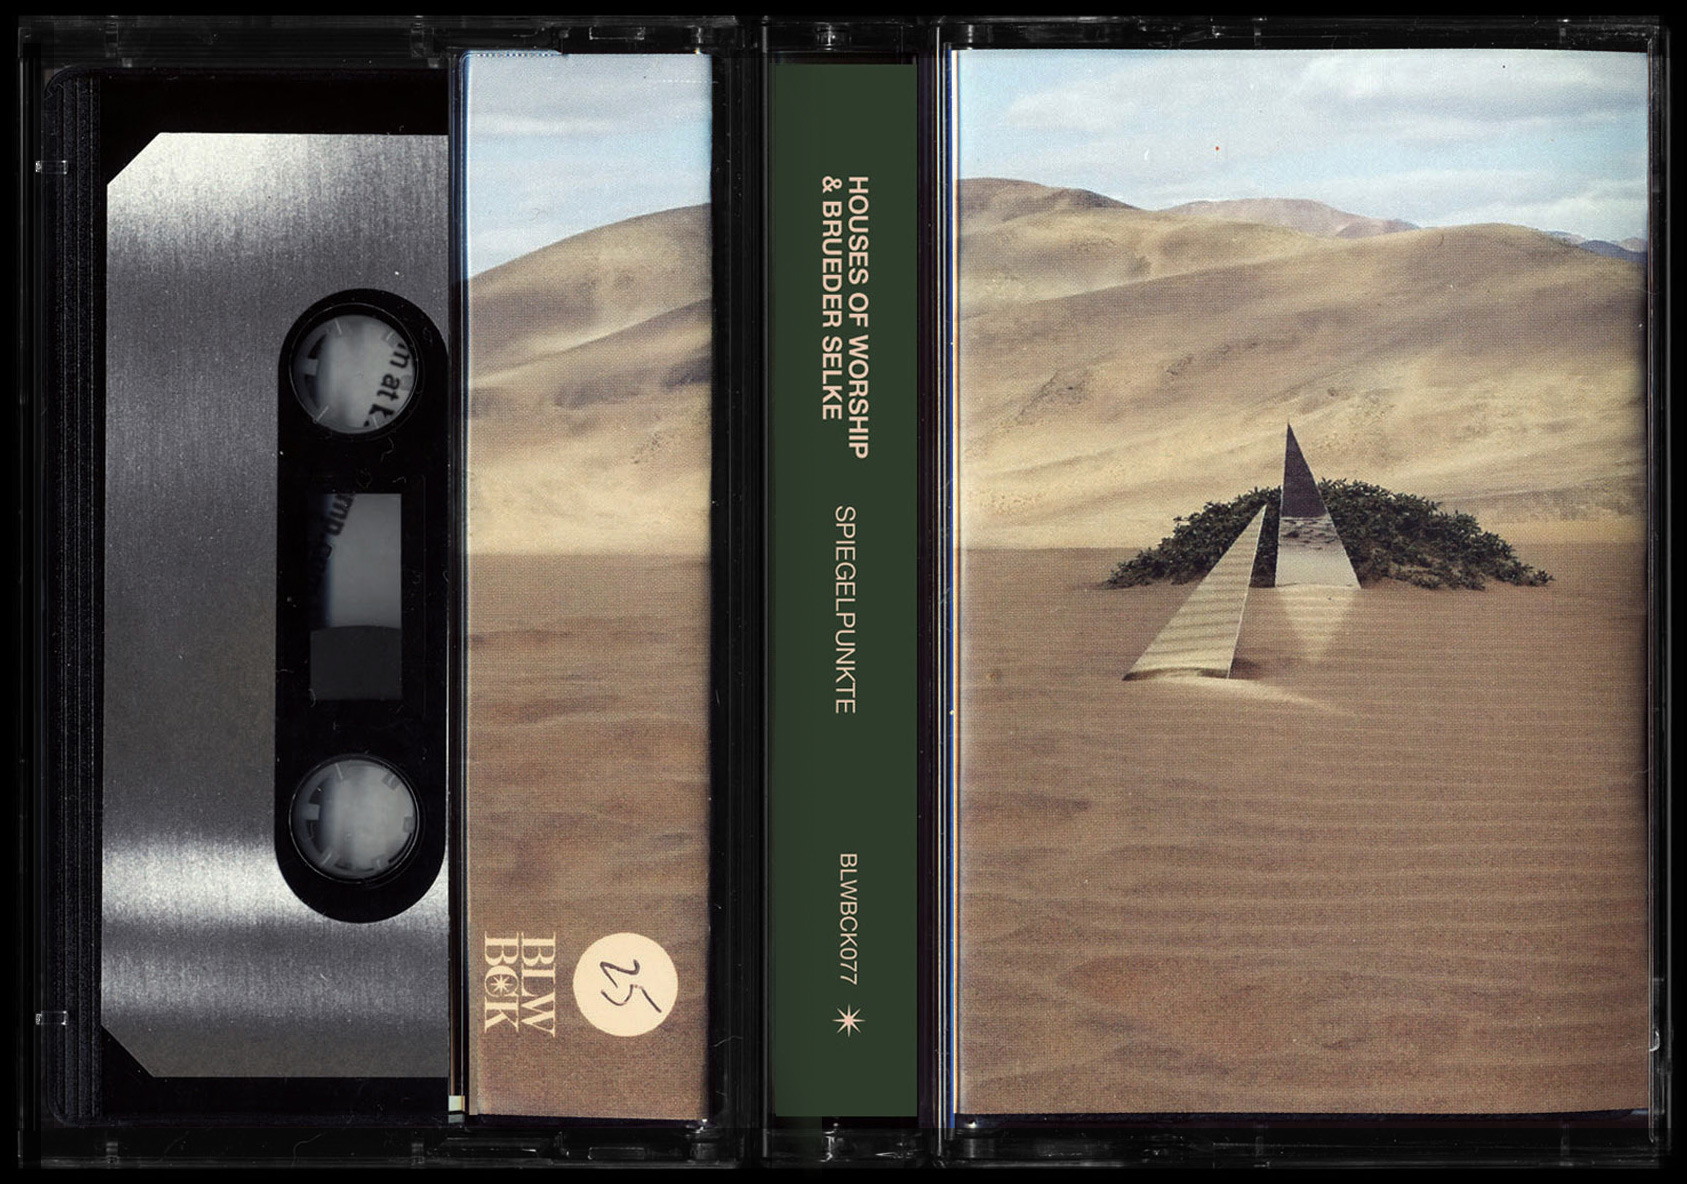 House Of Worship & Brueder Selke, Spiegelpunkte, Limited Cassette Edition